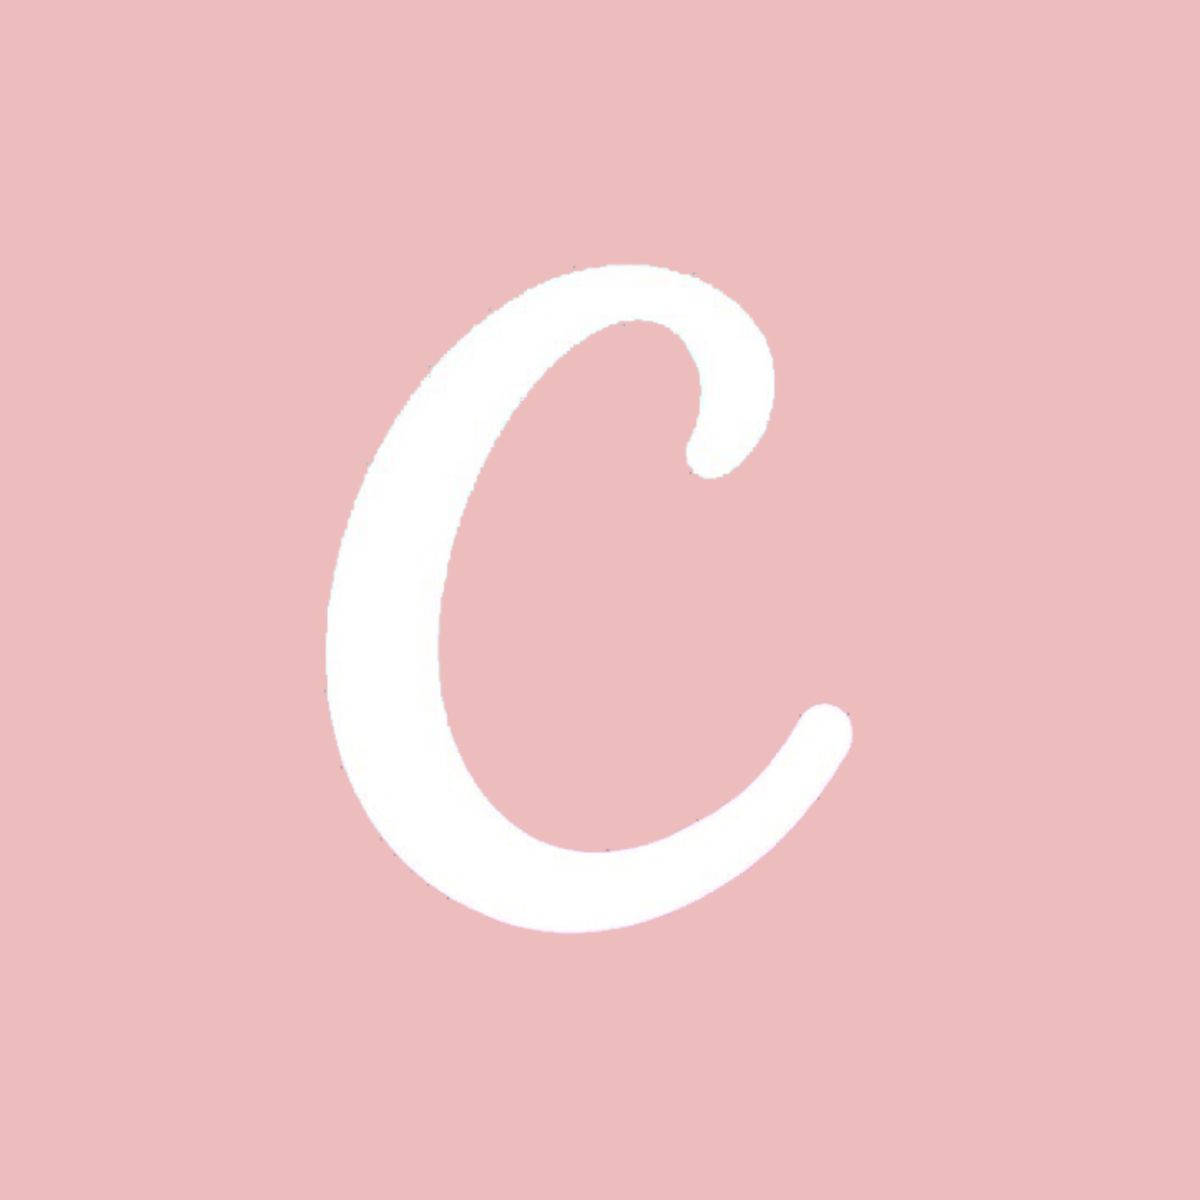 Elegant Pink Minimalistic Letter C Background